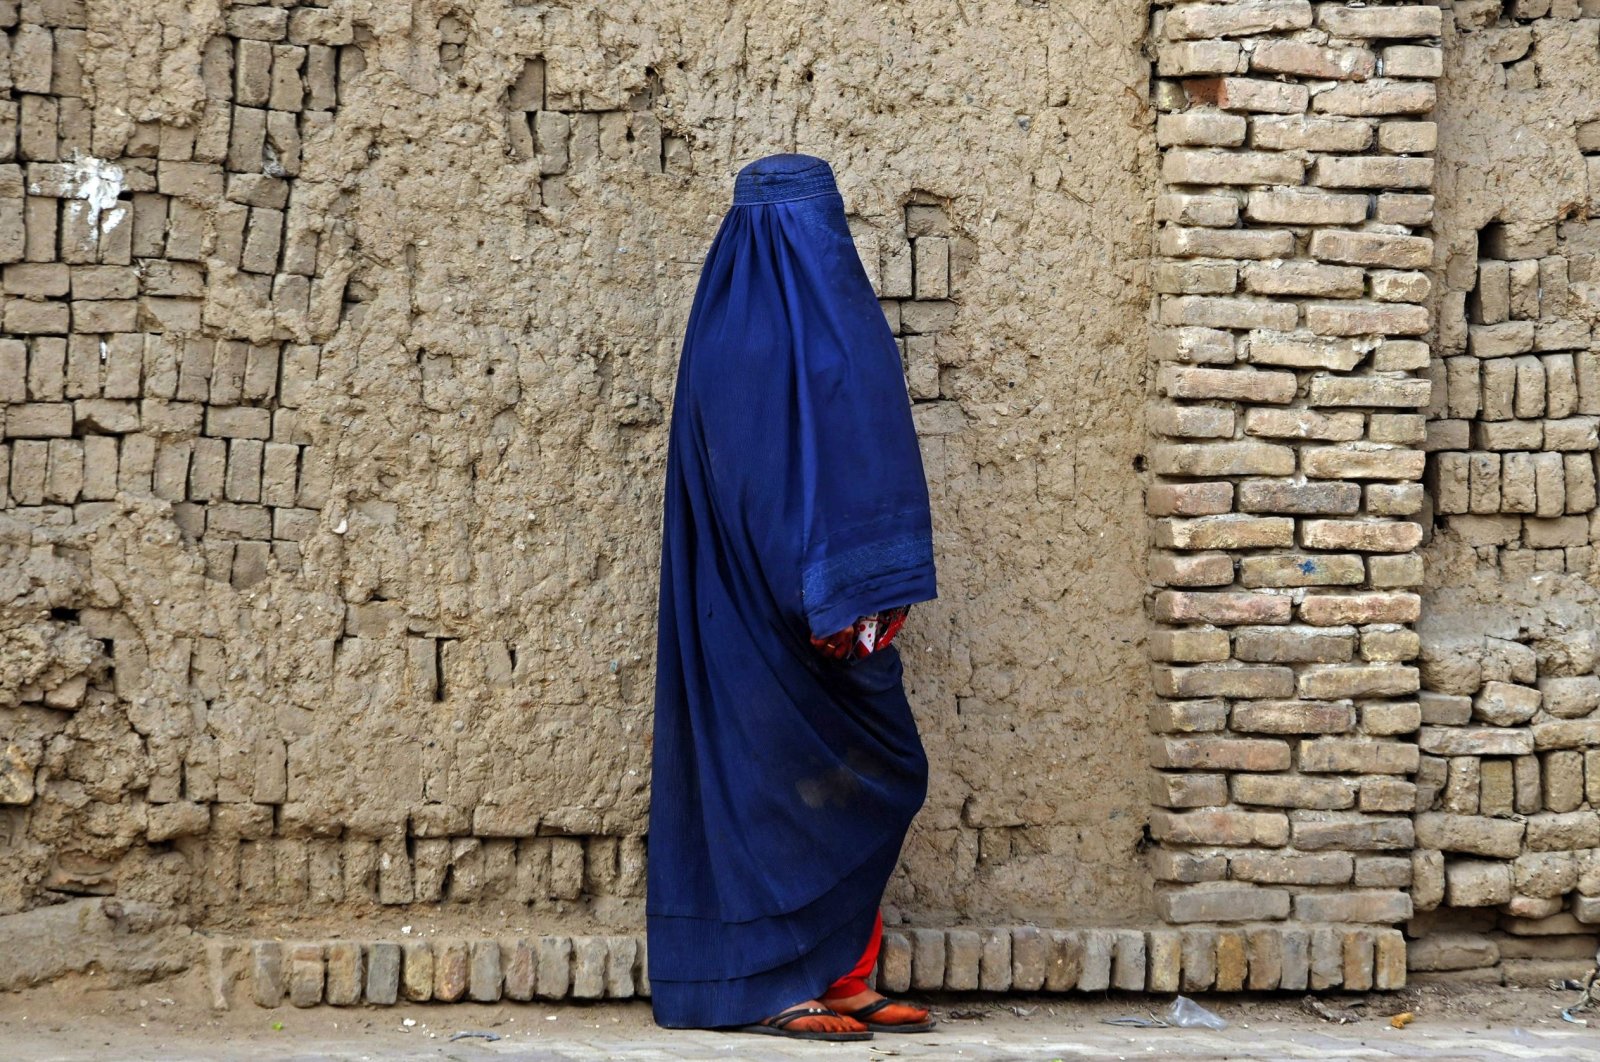 PBB meminta Taliban untuk mencabut pembatasan ‘tak terduga’ terhadap perempuan